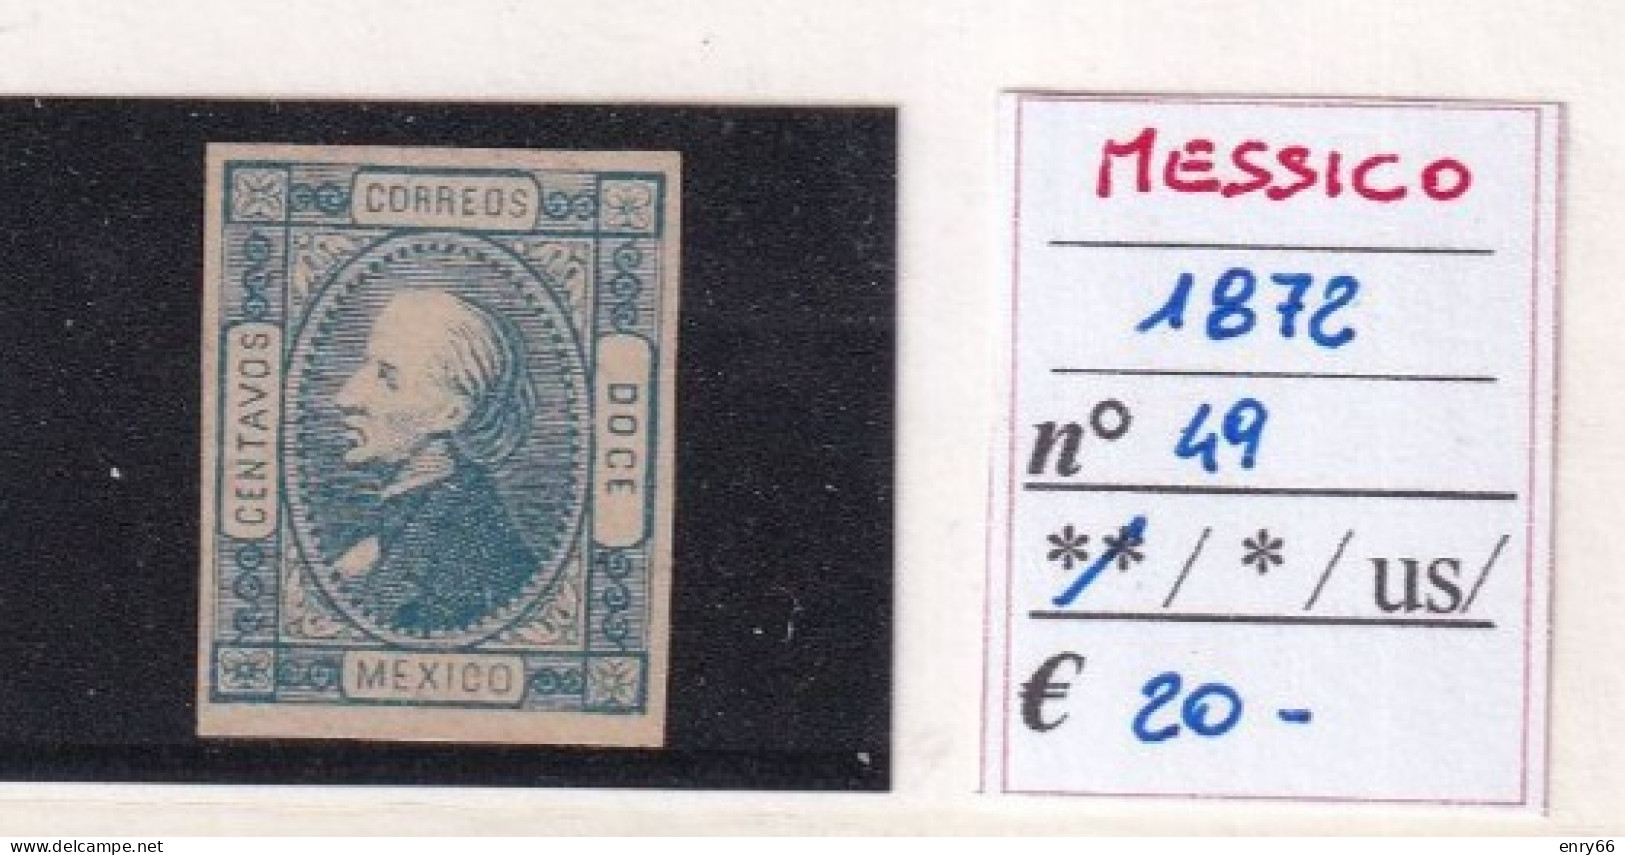 MESSICO 1872 N°49 MNH - Mexico